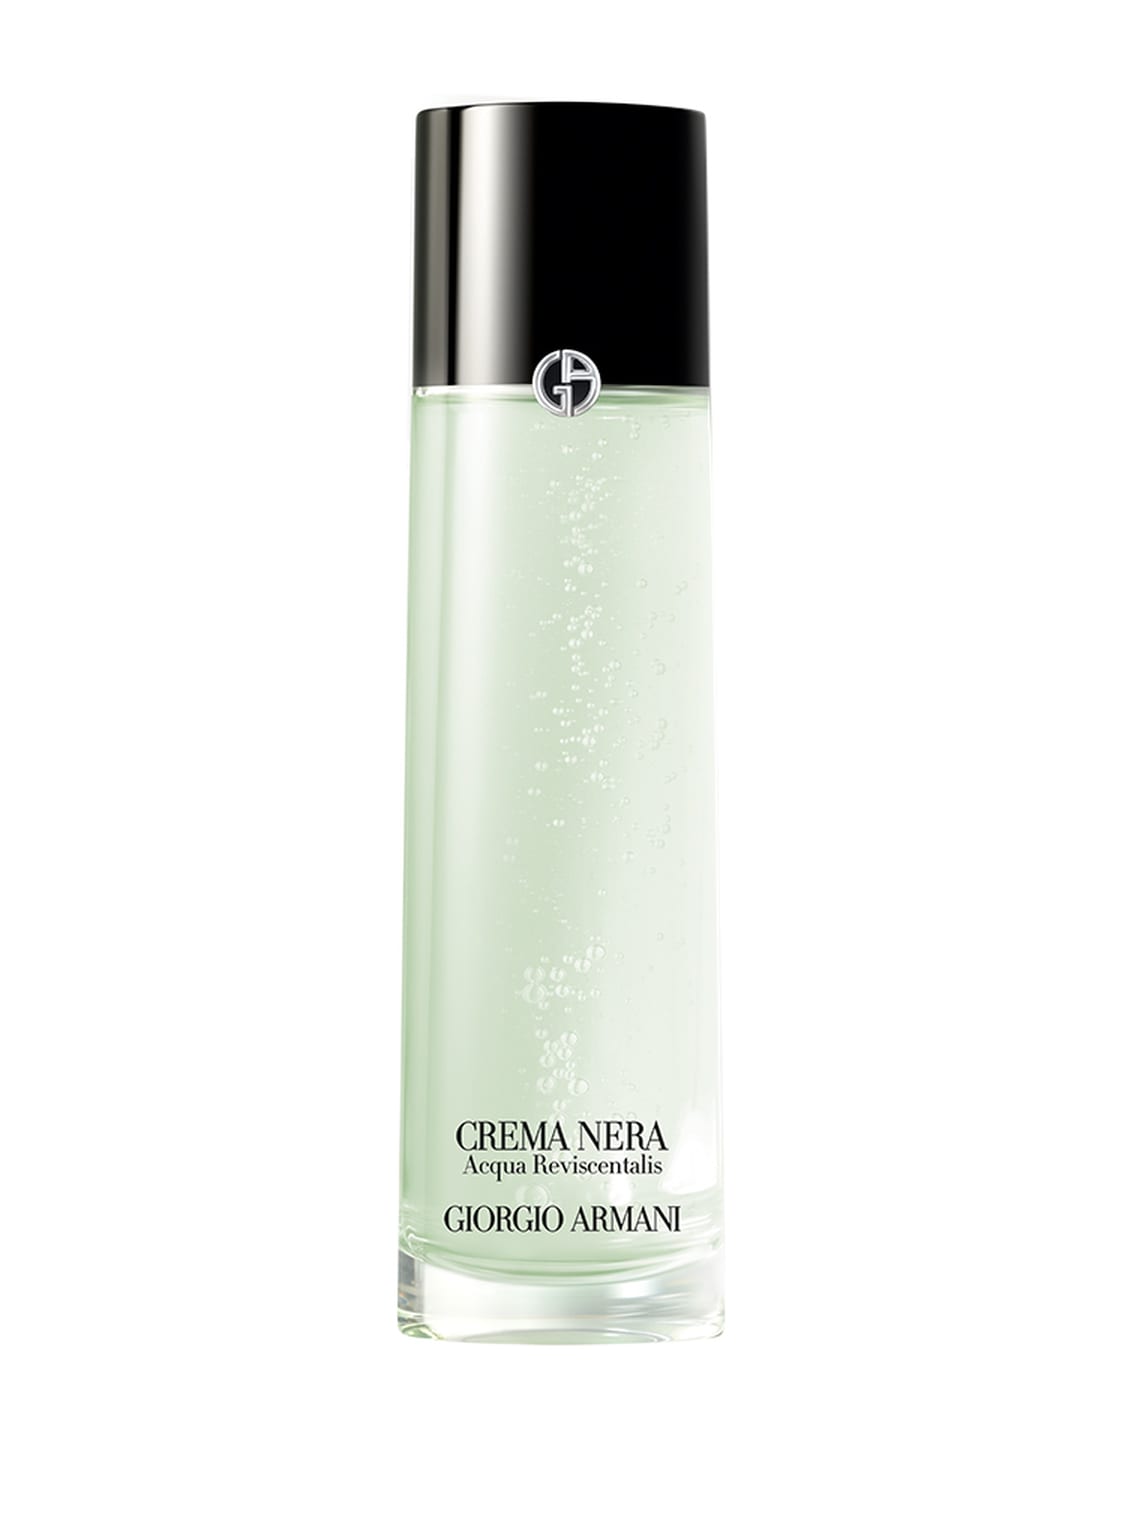 Image of Giorgio Armani Beauty Crema Nera Aqua Reviscentalis 150 ml